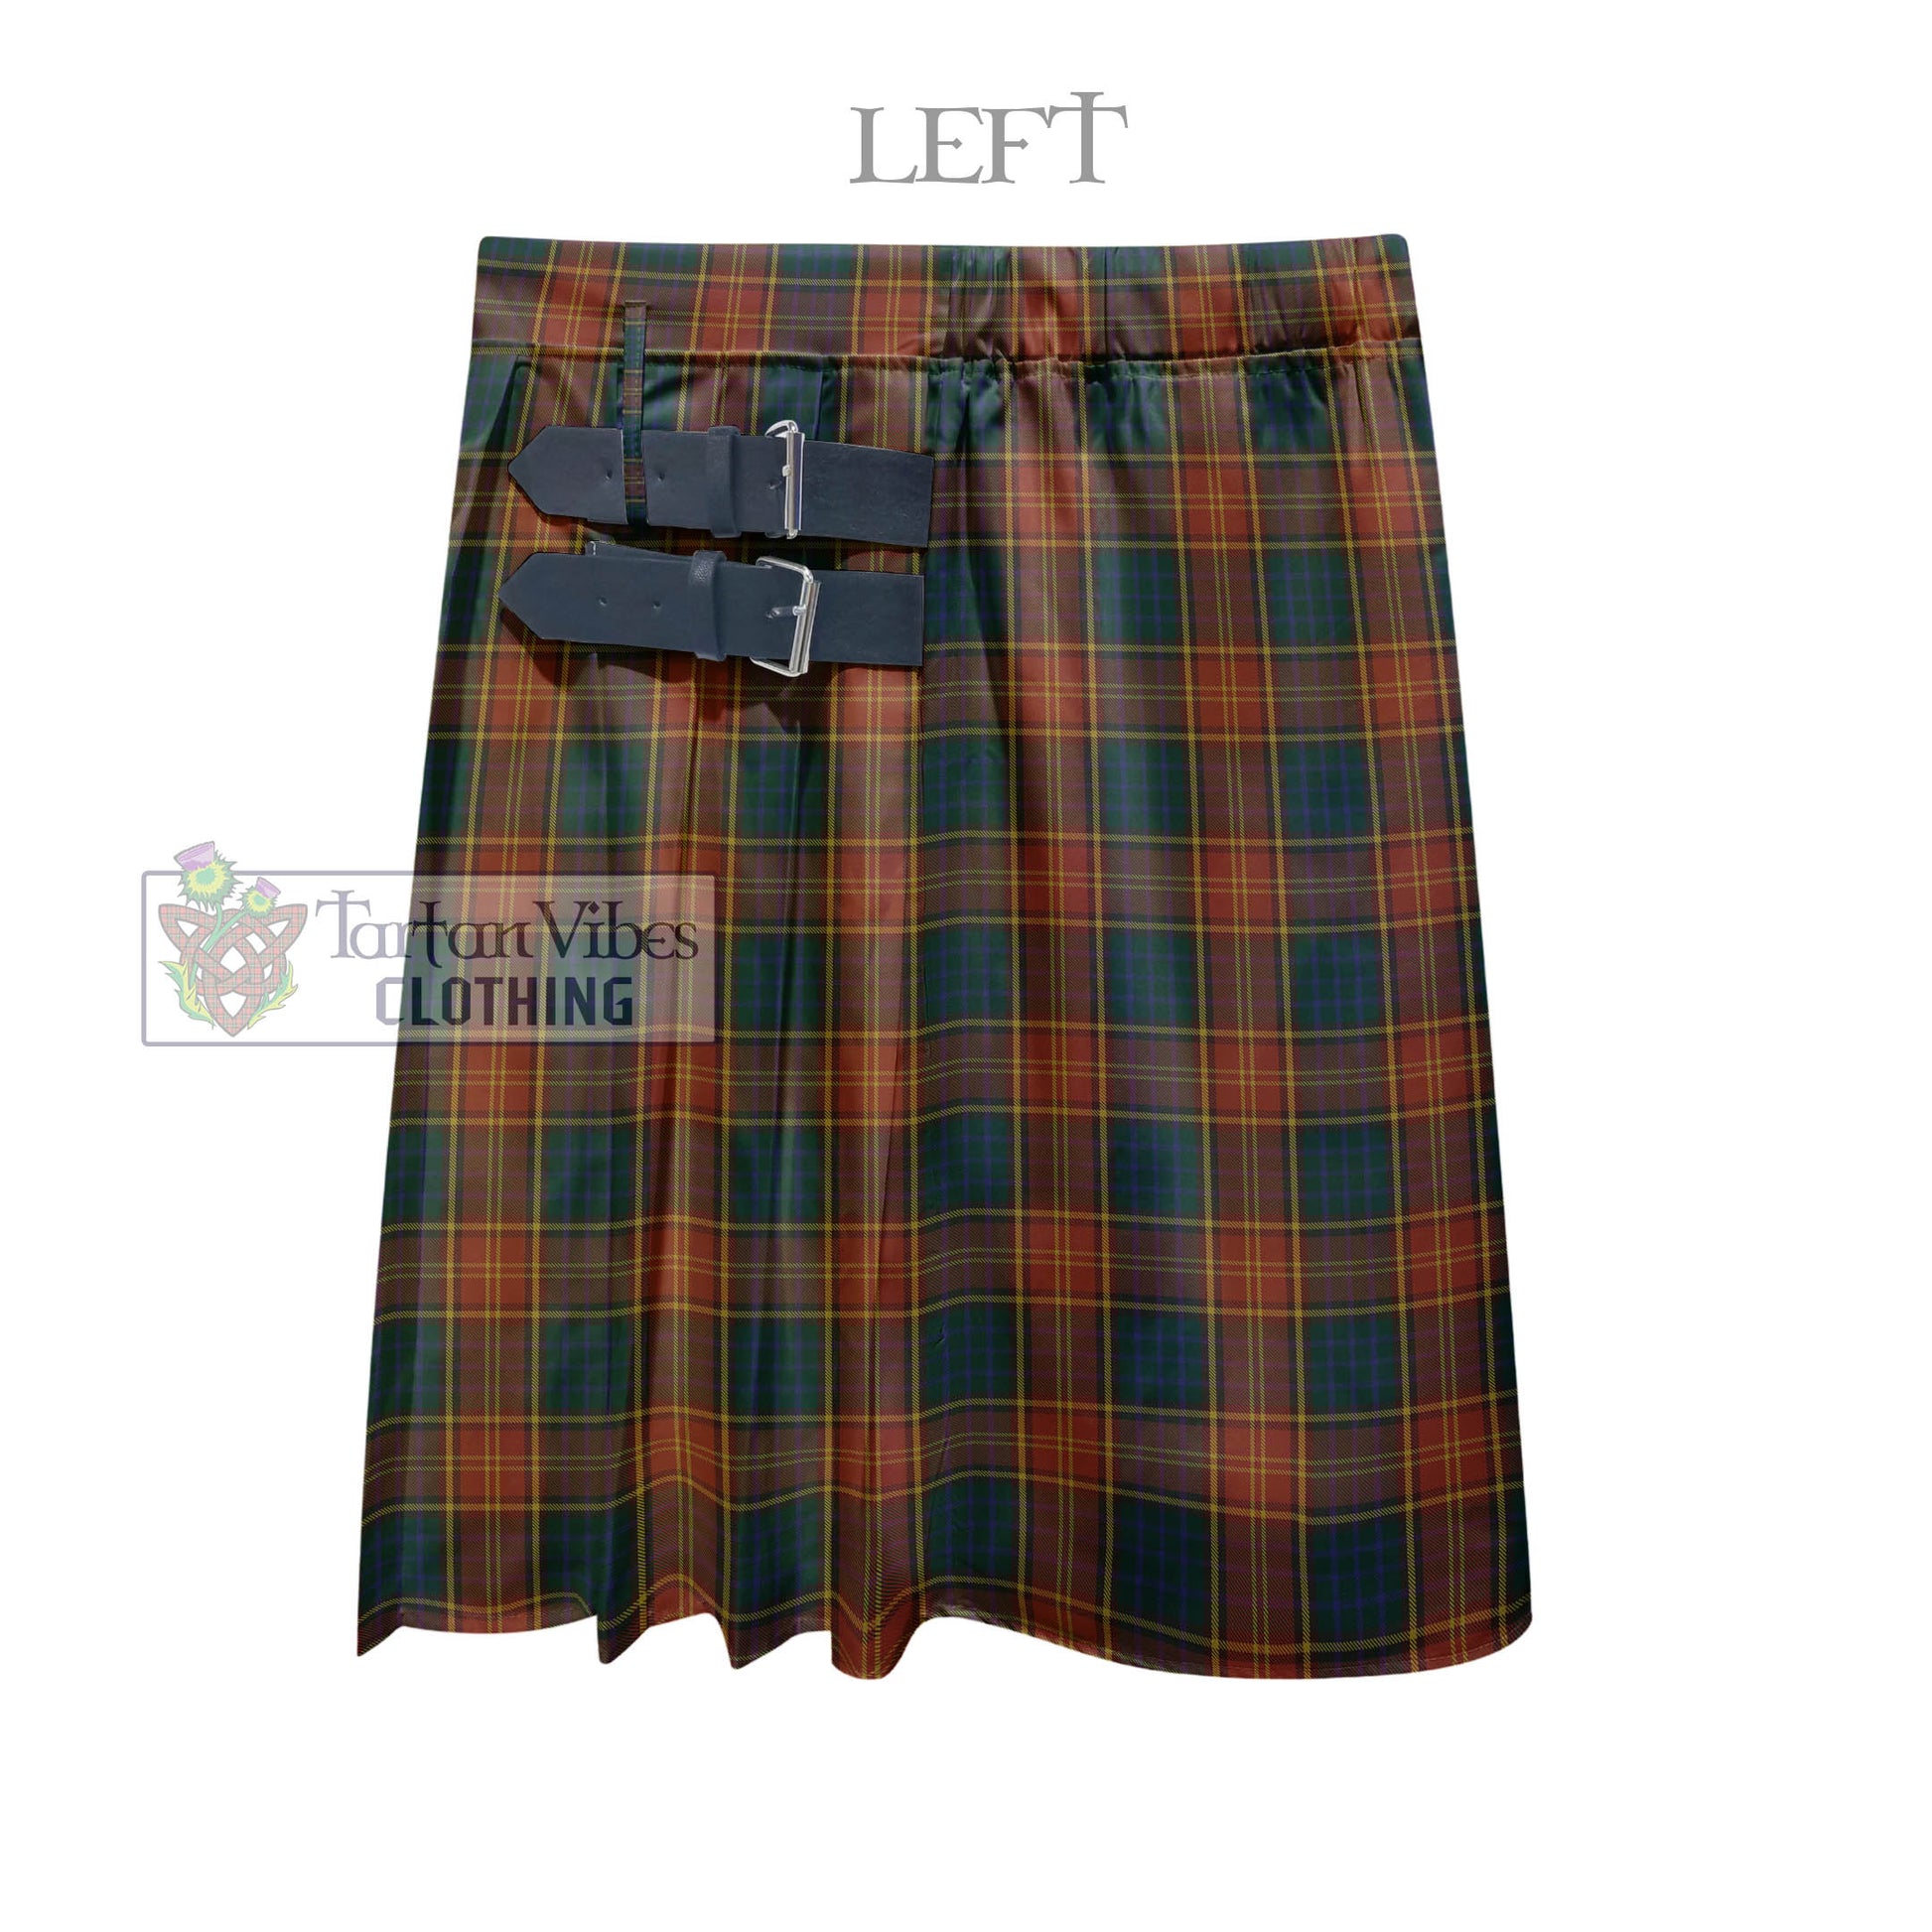 Tartan Vibes Clothing Roscommon County Ireland Tartan Men's Pleated Skirt - Fashion Casual Retro Scottish Style